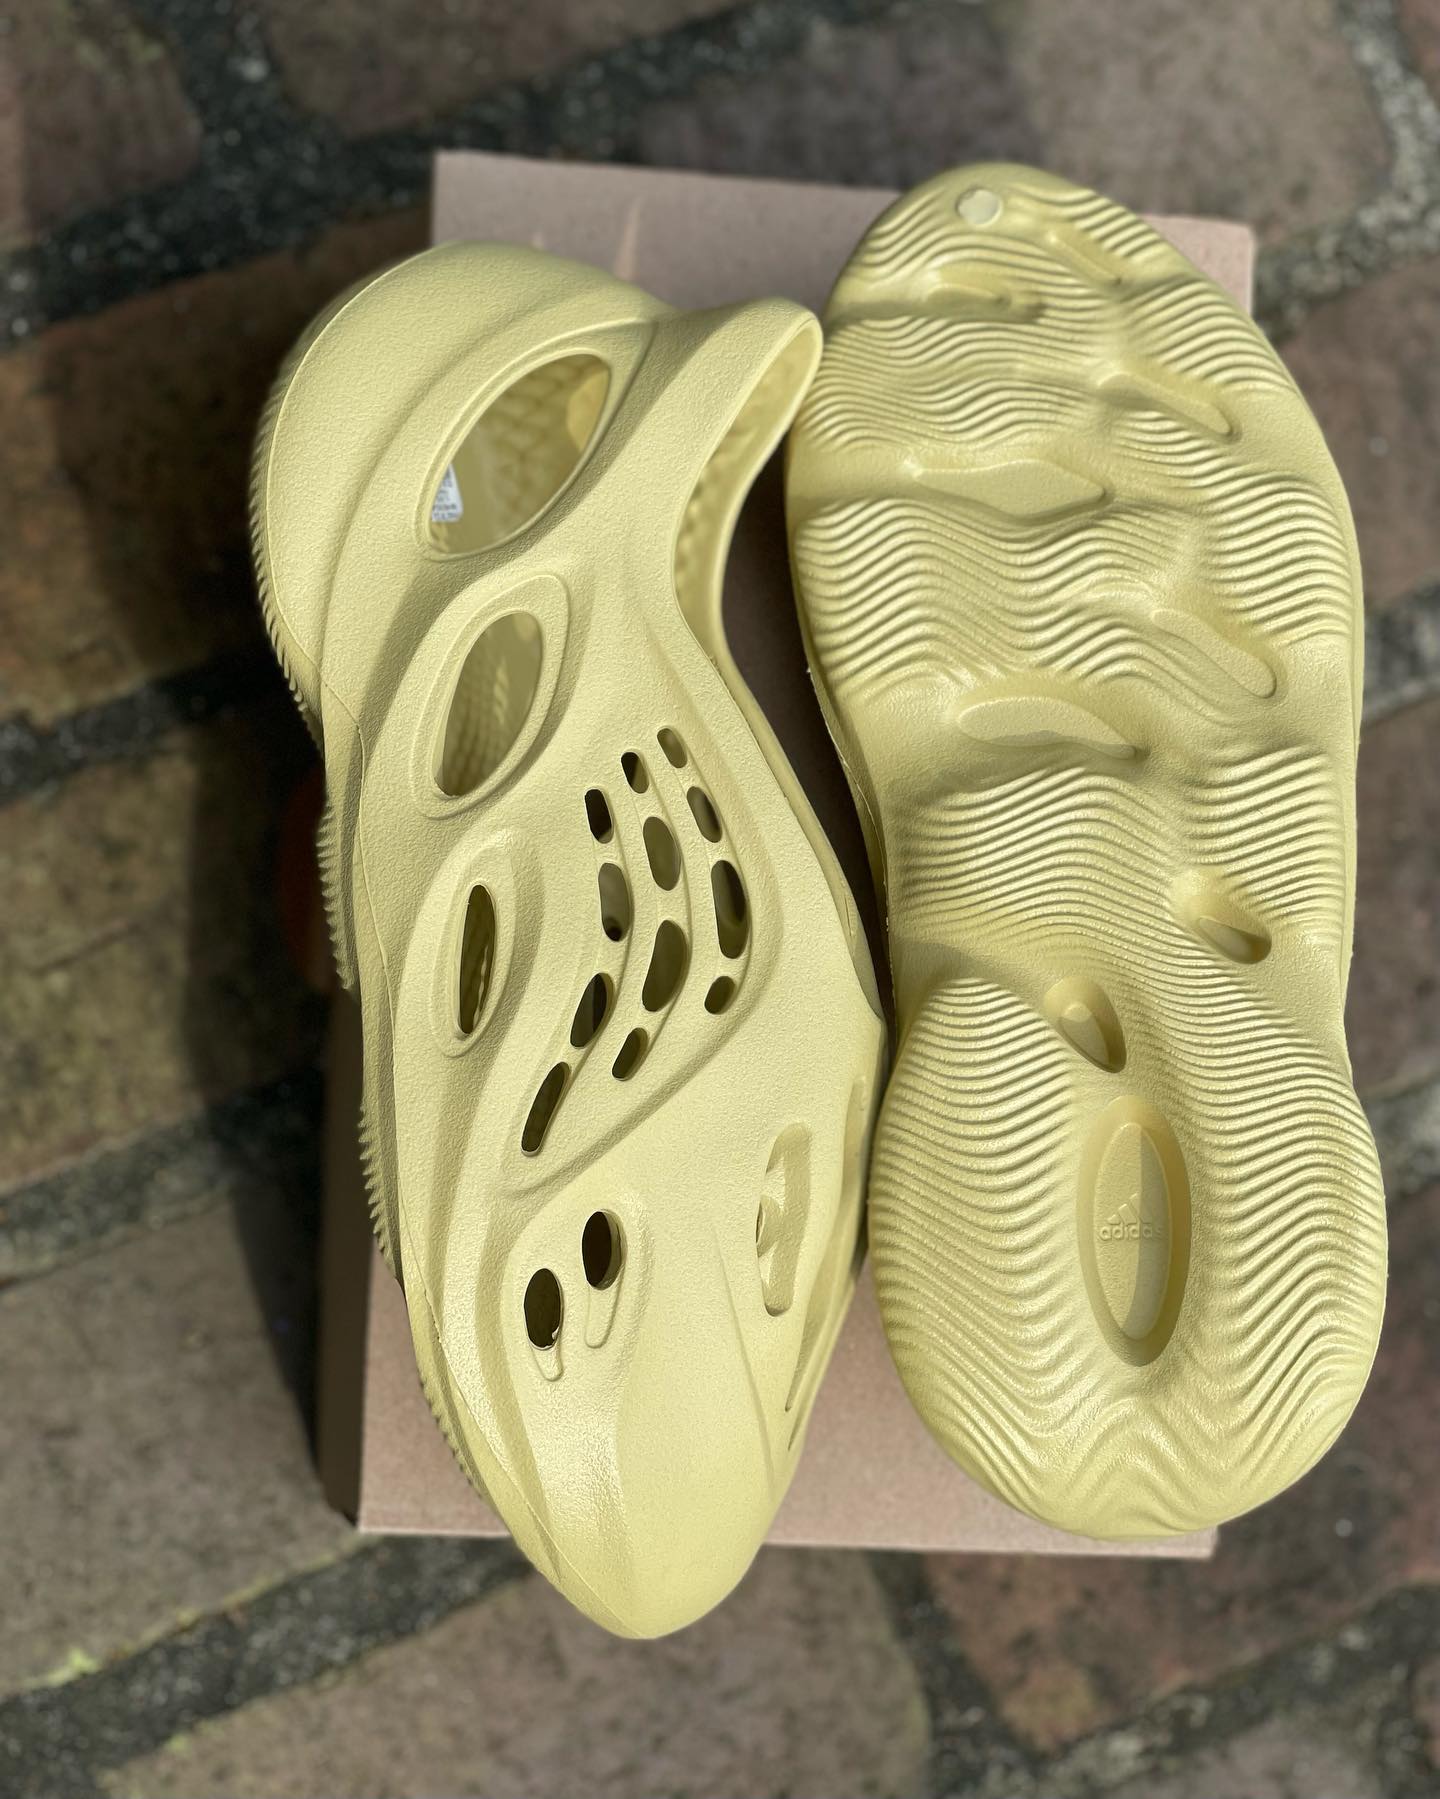 Adidas Yeezy Foam Runner 'Sulfur' Top